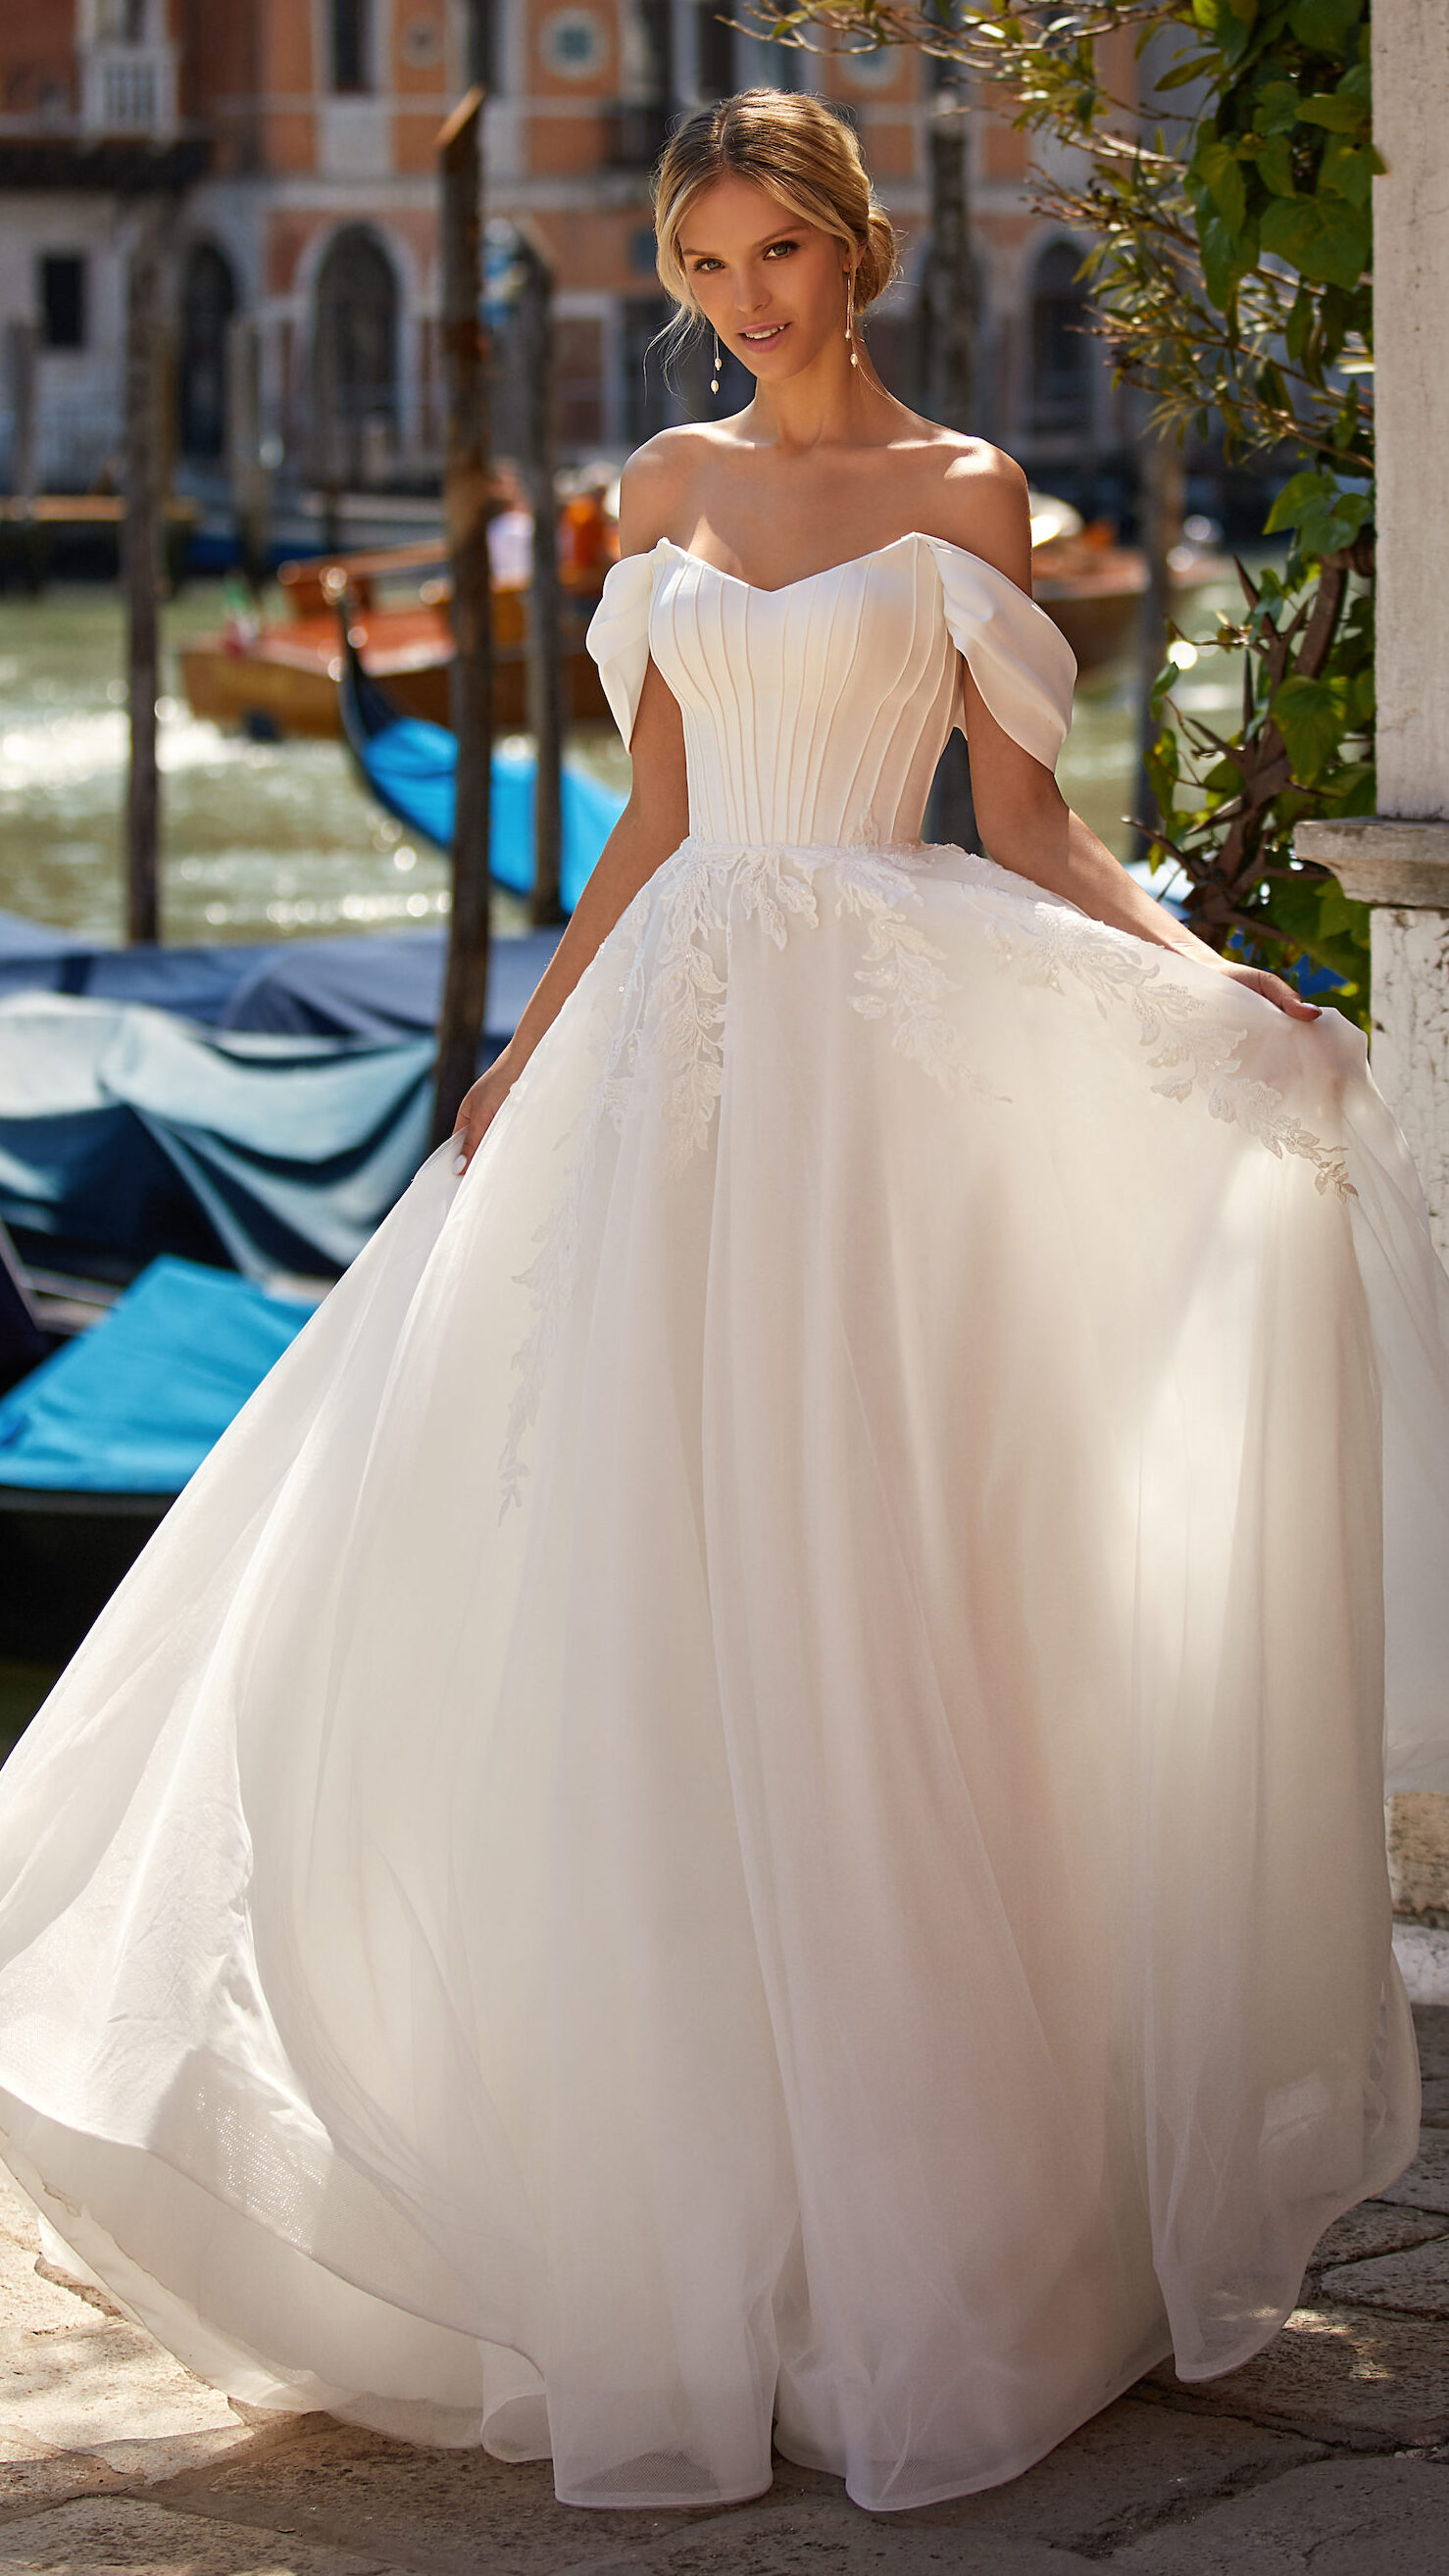 Alanis by Katy Corso wedding dress